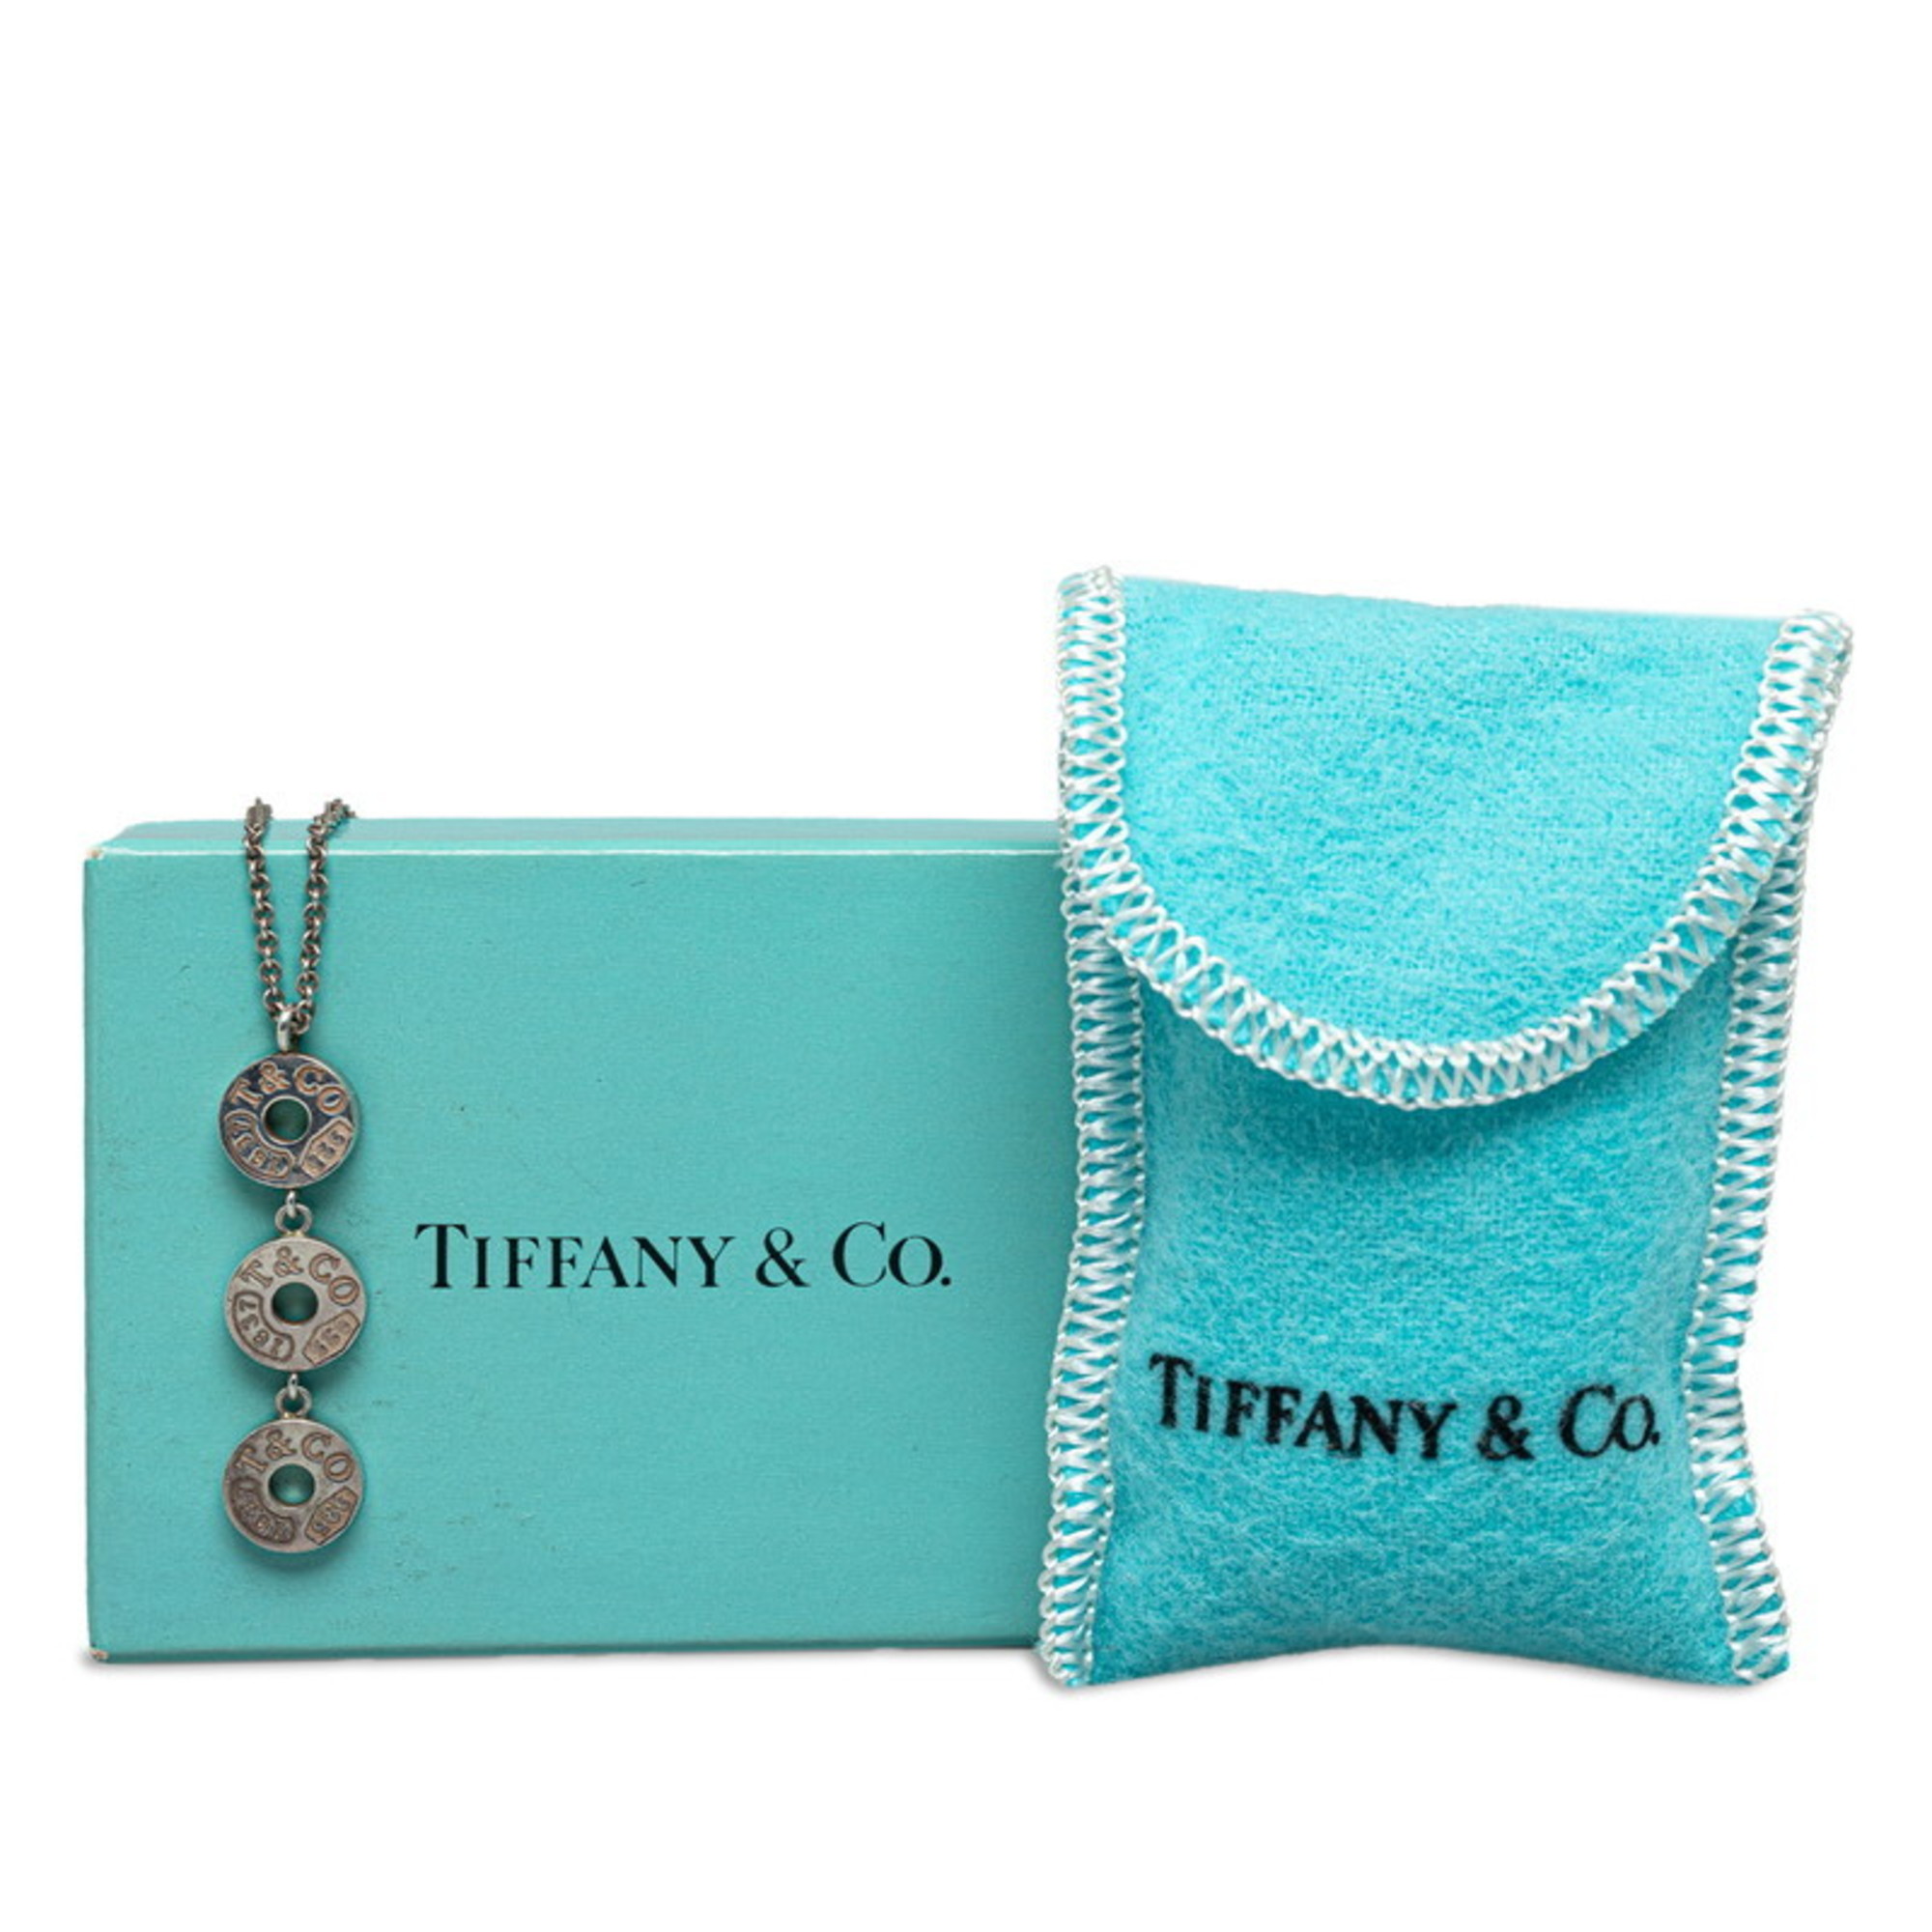 Tiffany Triple Circle Necklace SV925 Silver Women's TIFFANY&Co.